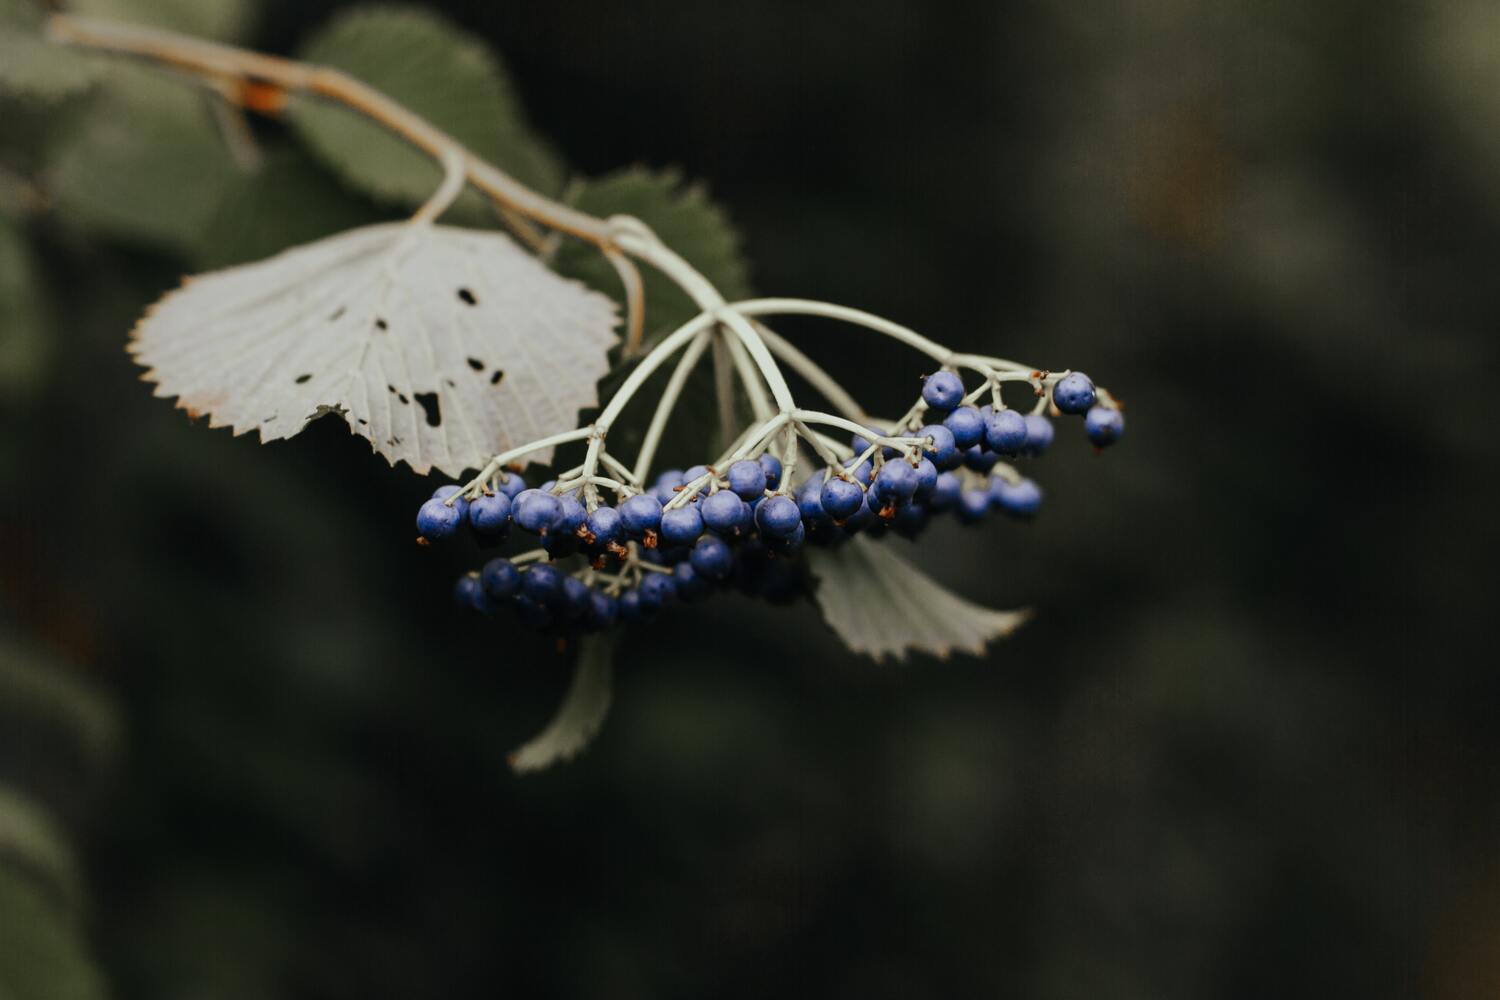 elderberries on a plant